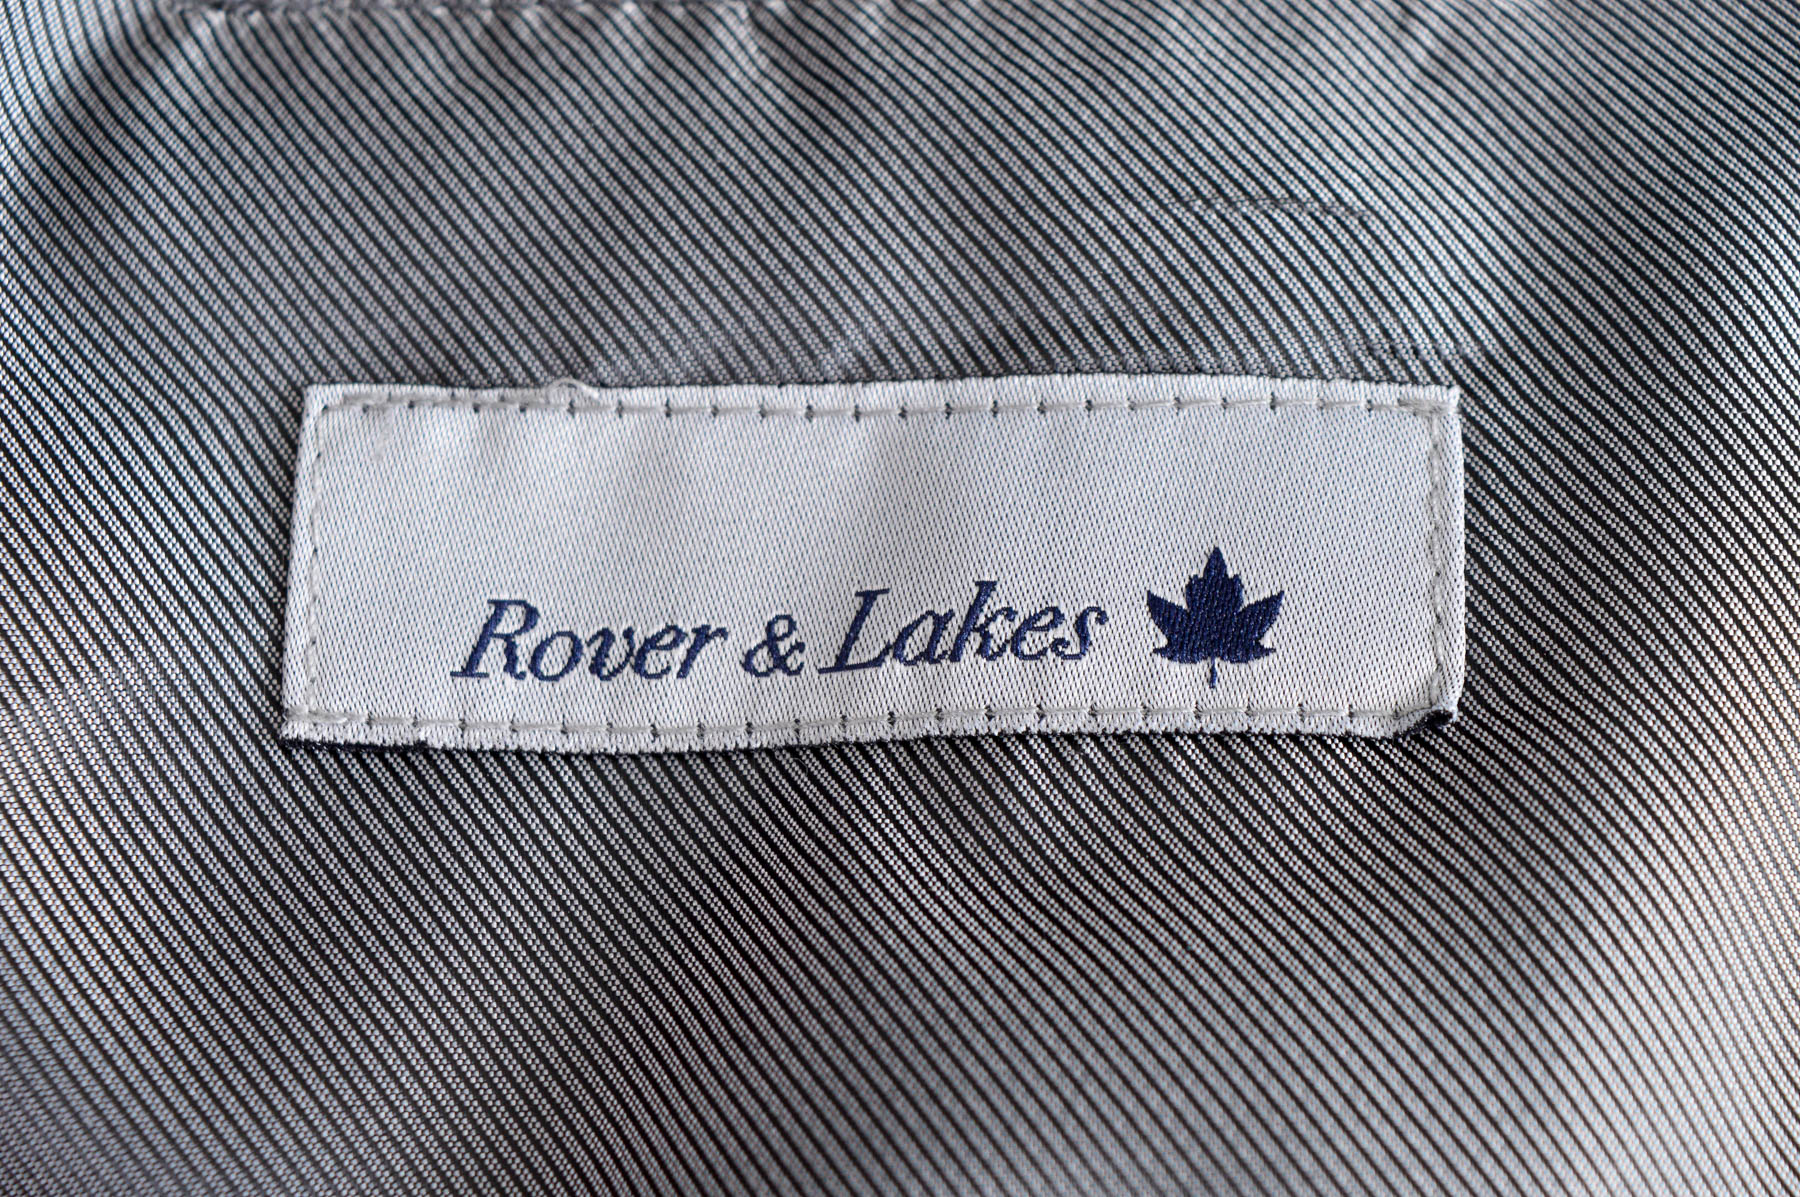 Kurtka męska - Rover & Lakes - 2